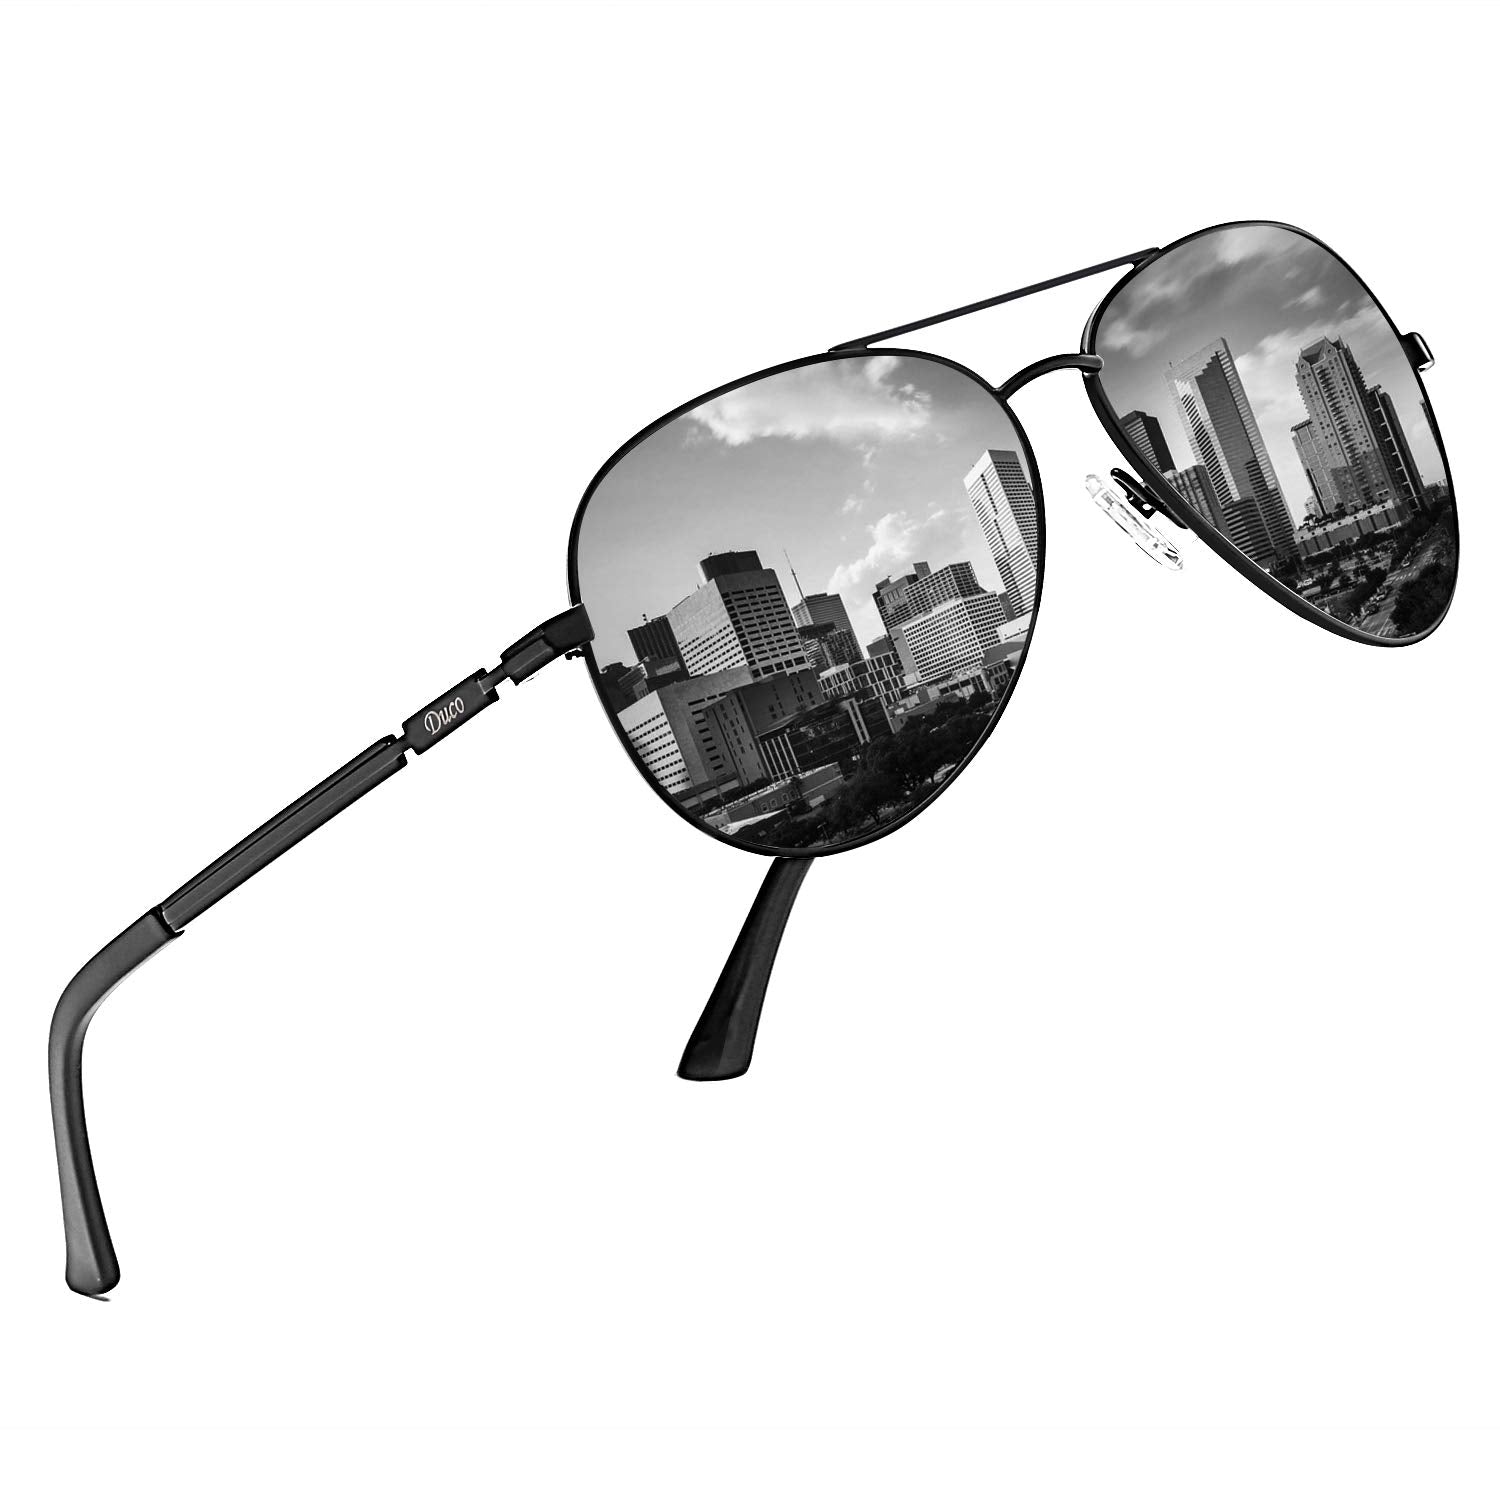 DUCO  Polarized Sunglasses for Men and Women 3025K